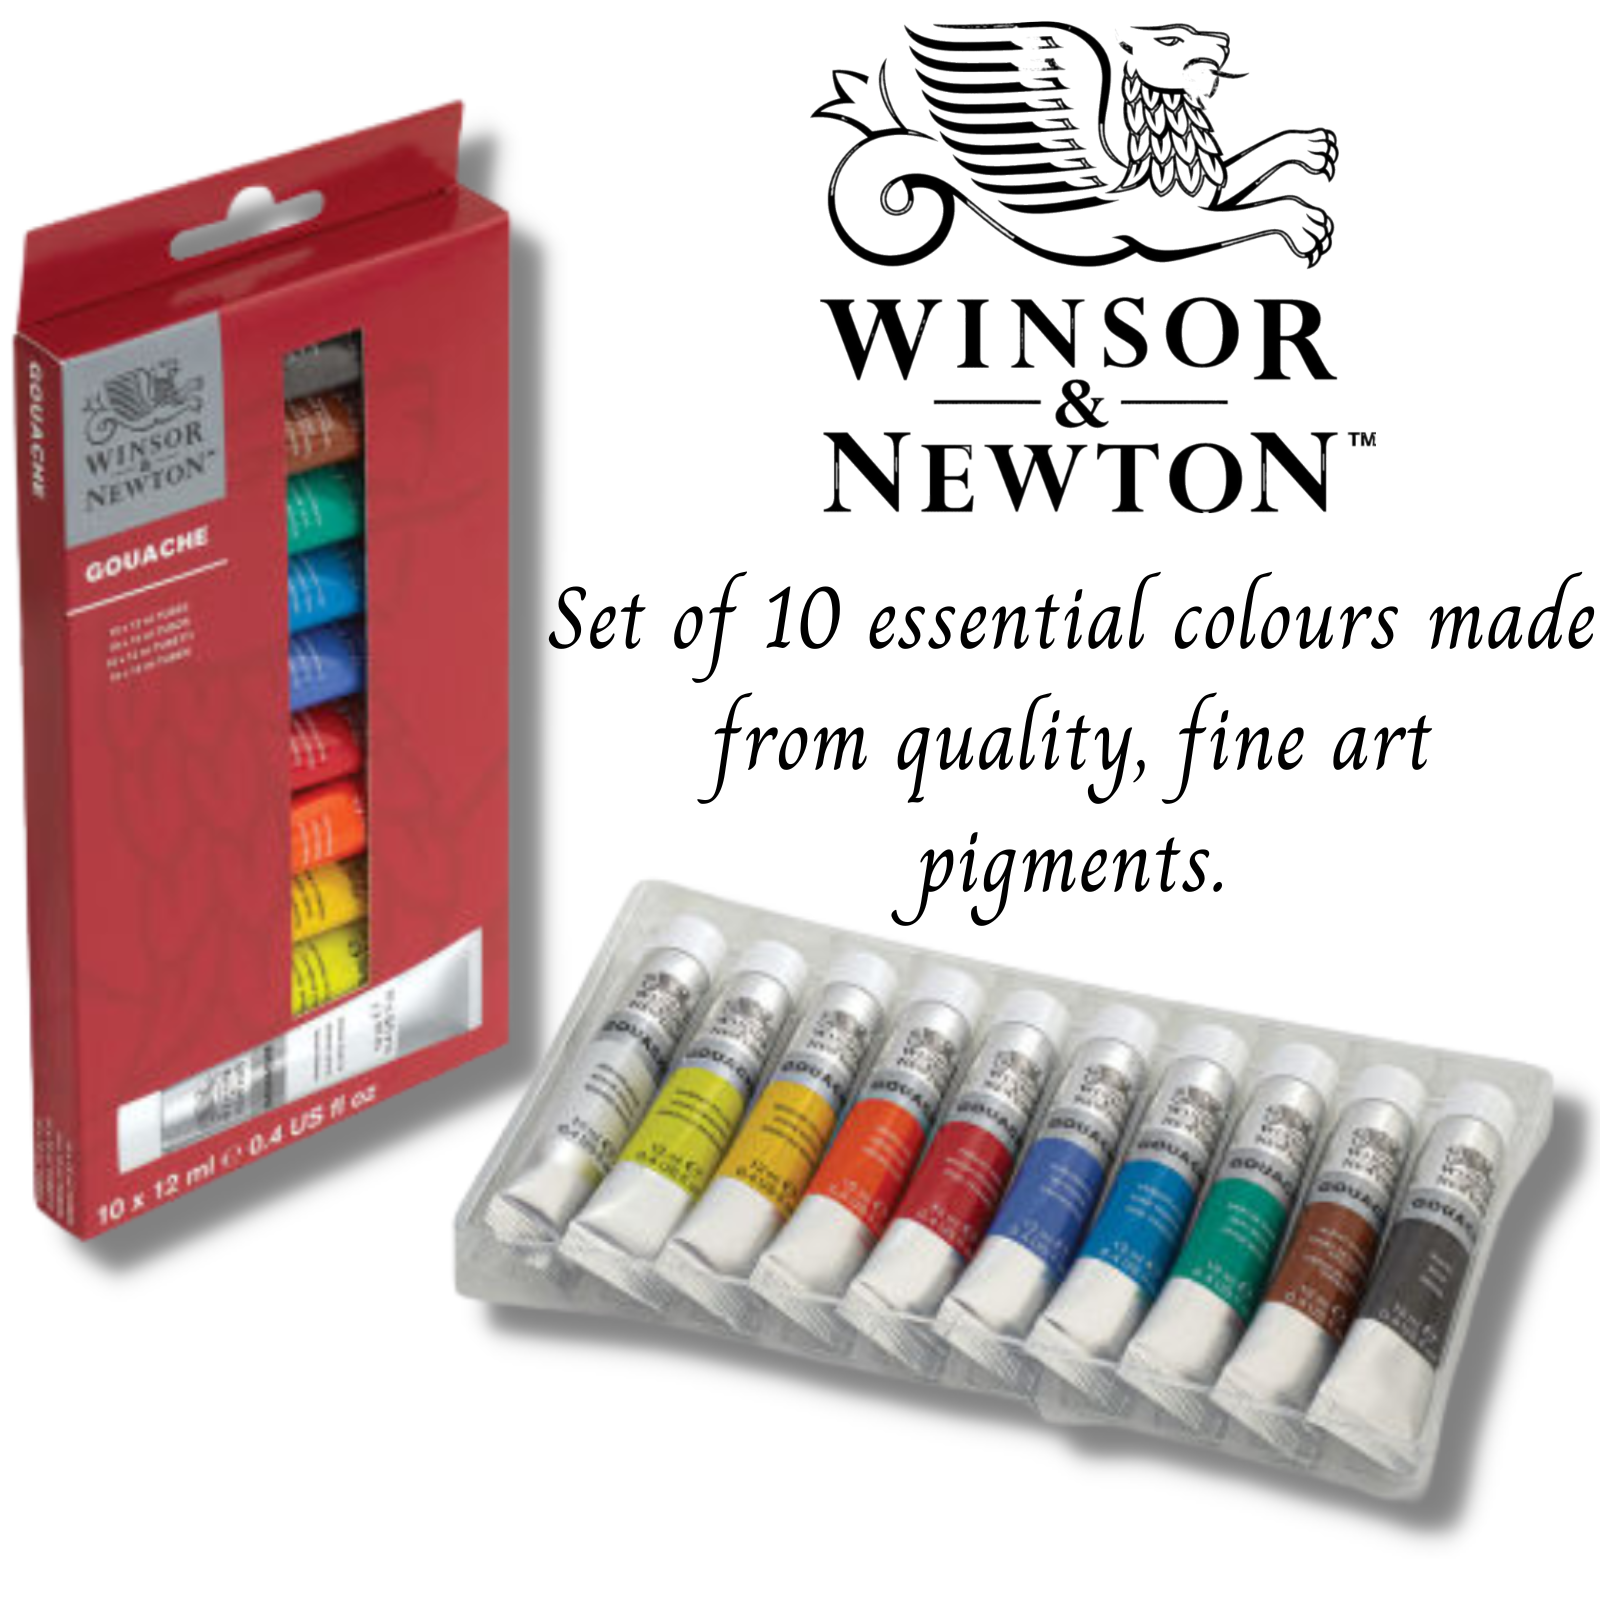 Winsor & Newton Gouache Primary Colour Set, 12ml, 10 Colours - contains 10 x 12ml tubes in the essential colours